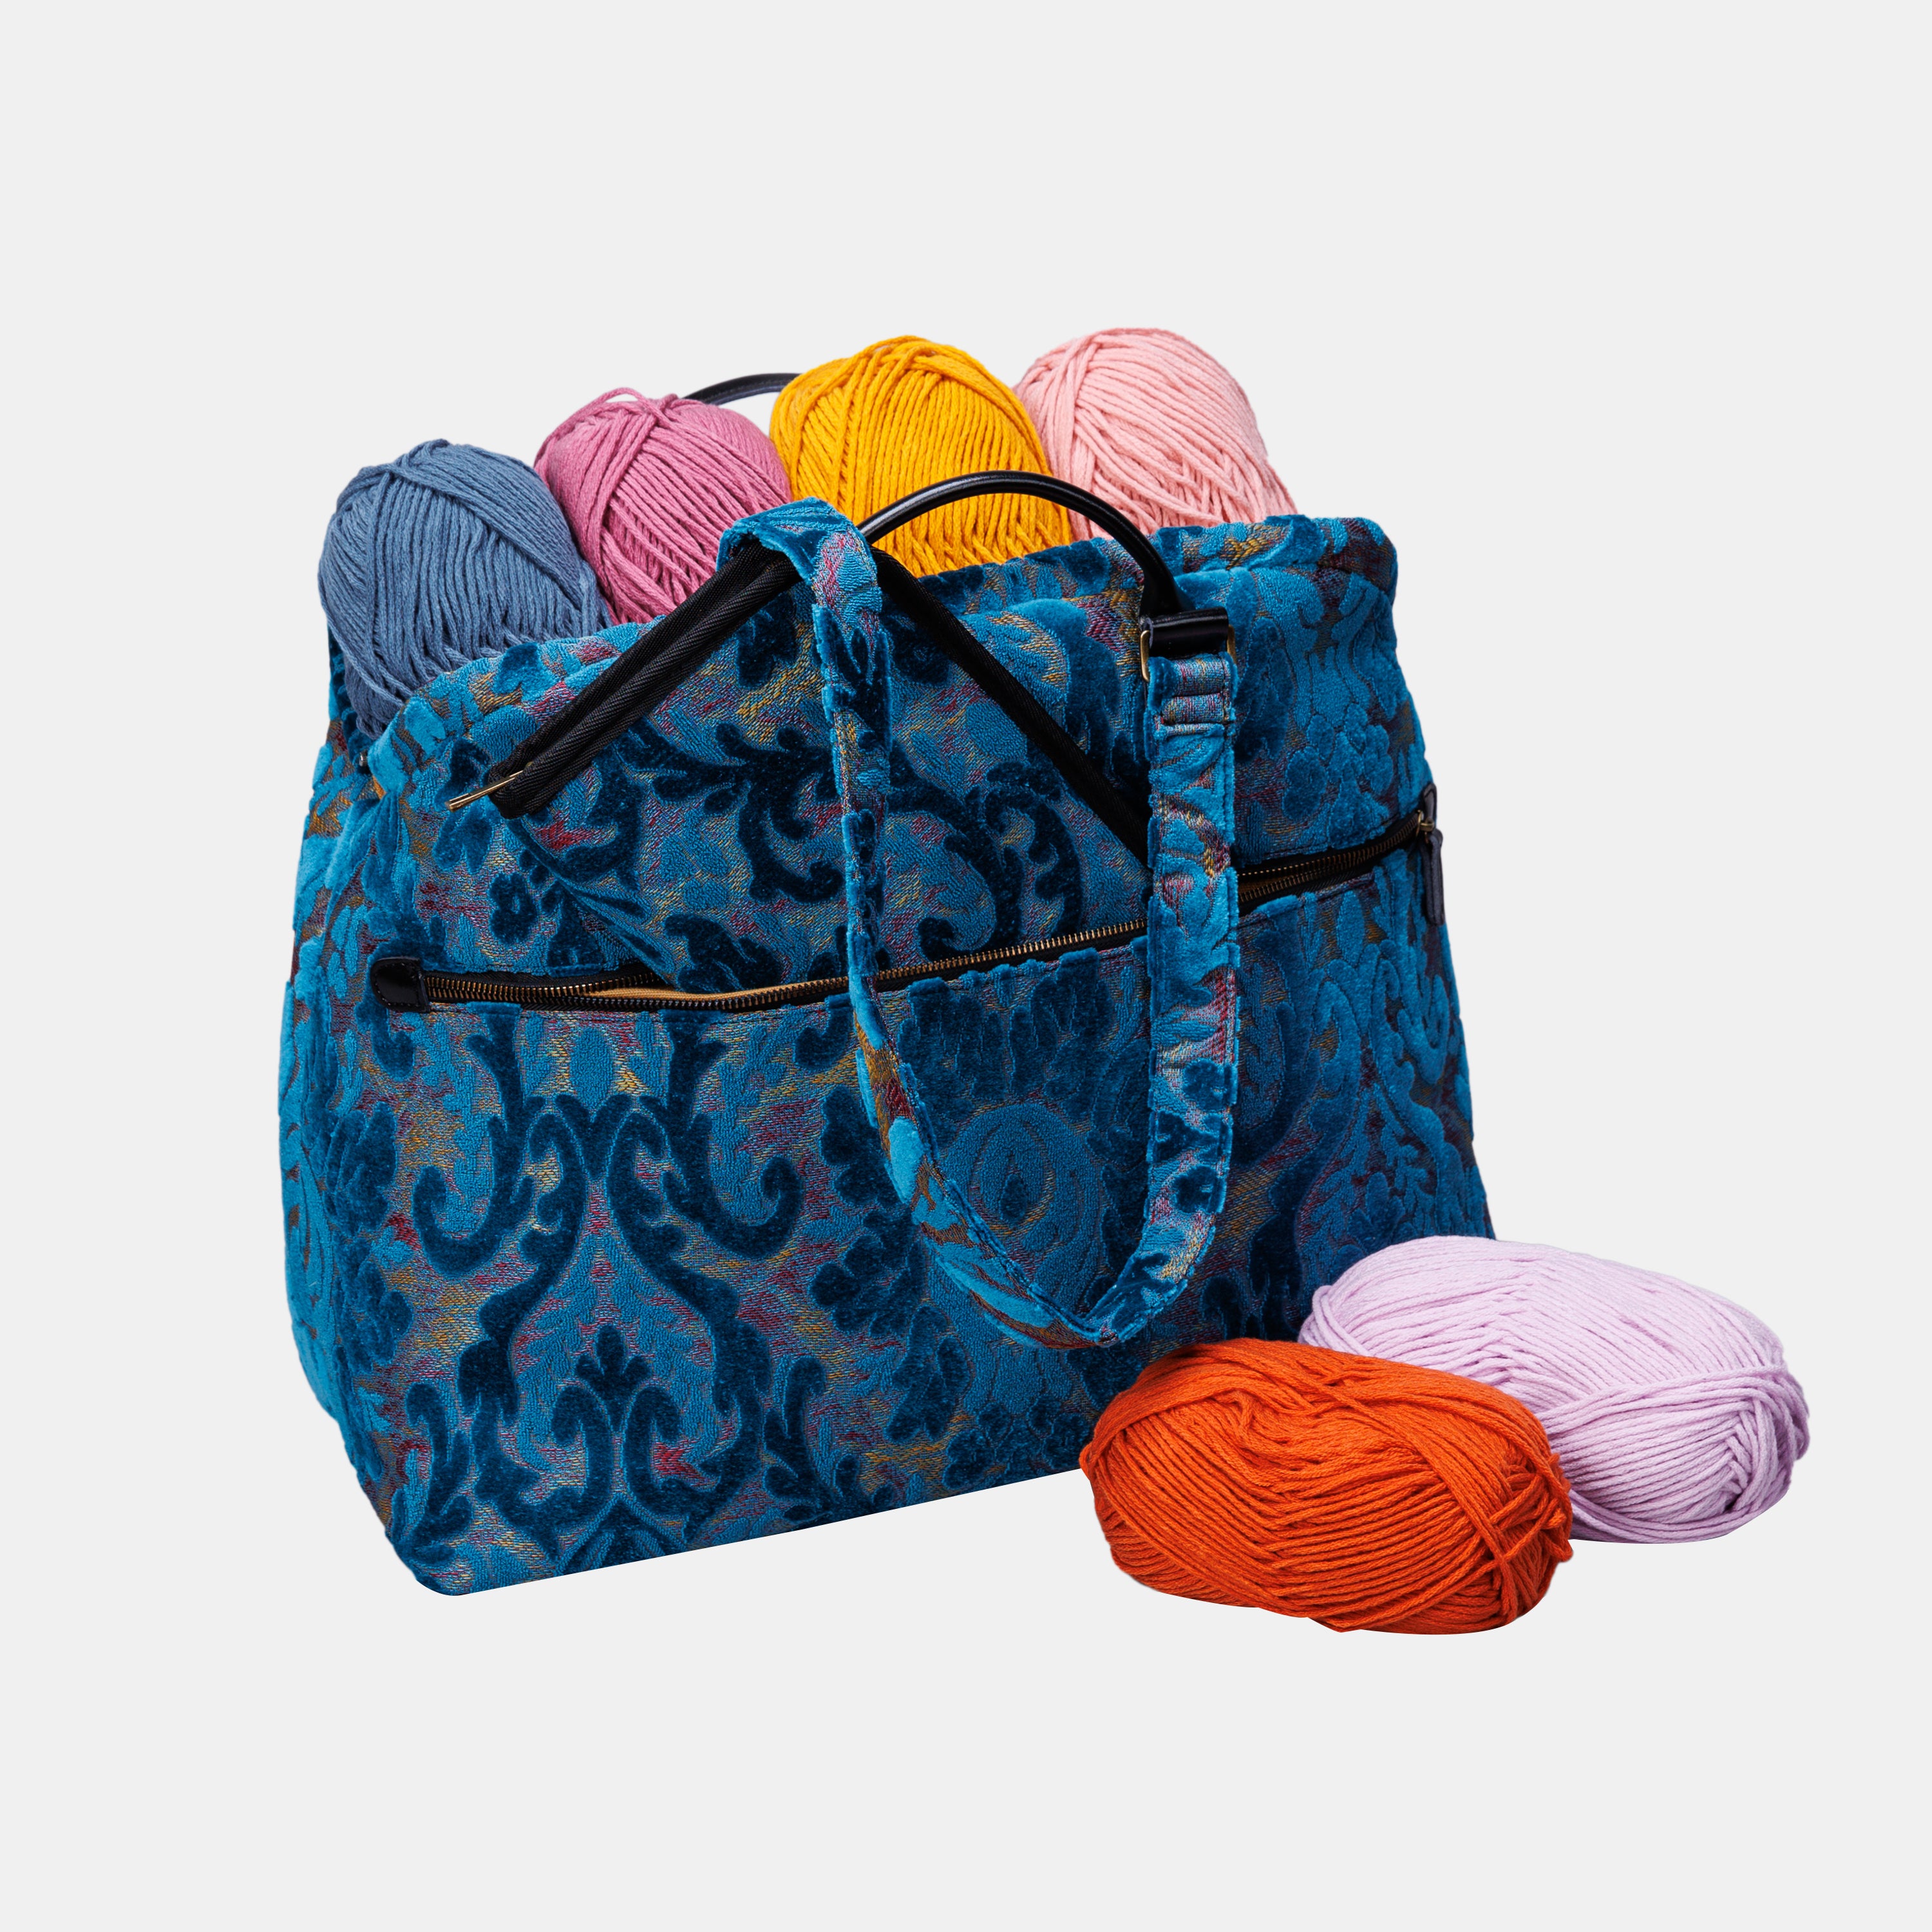 Burnout Velvet Aqua Blue Knitting Project Bag  MCW Handmade-7